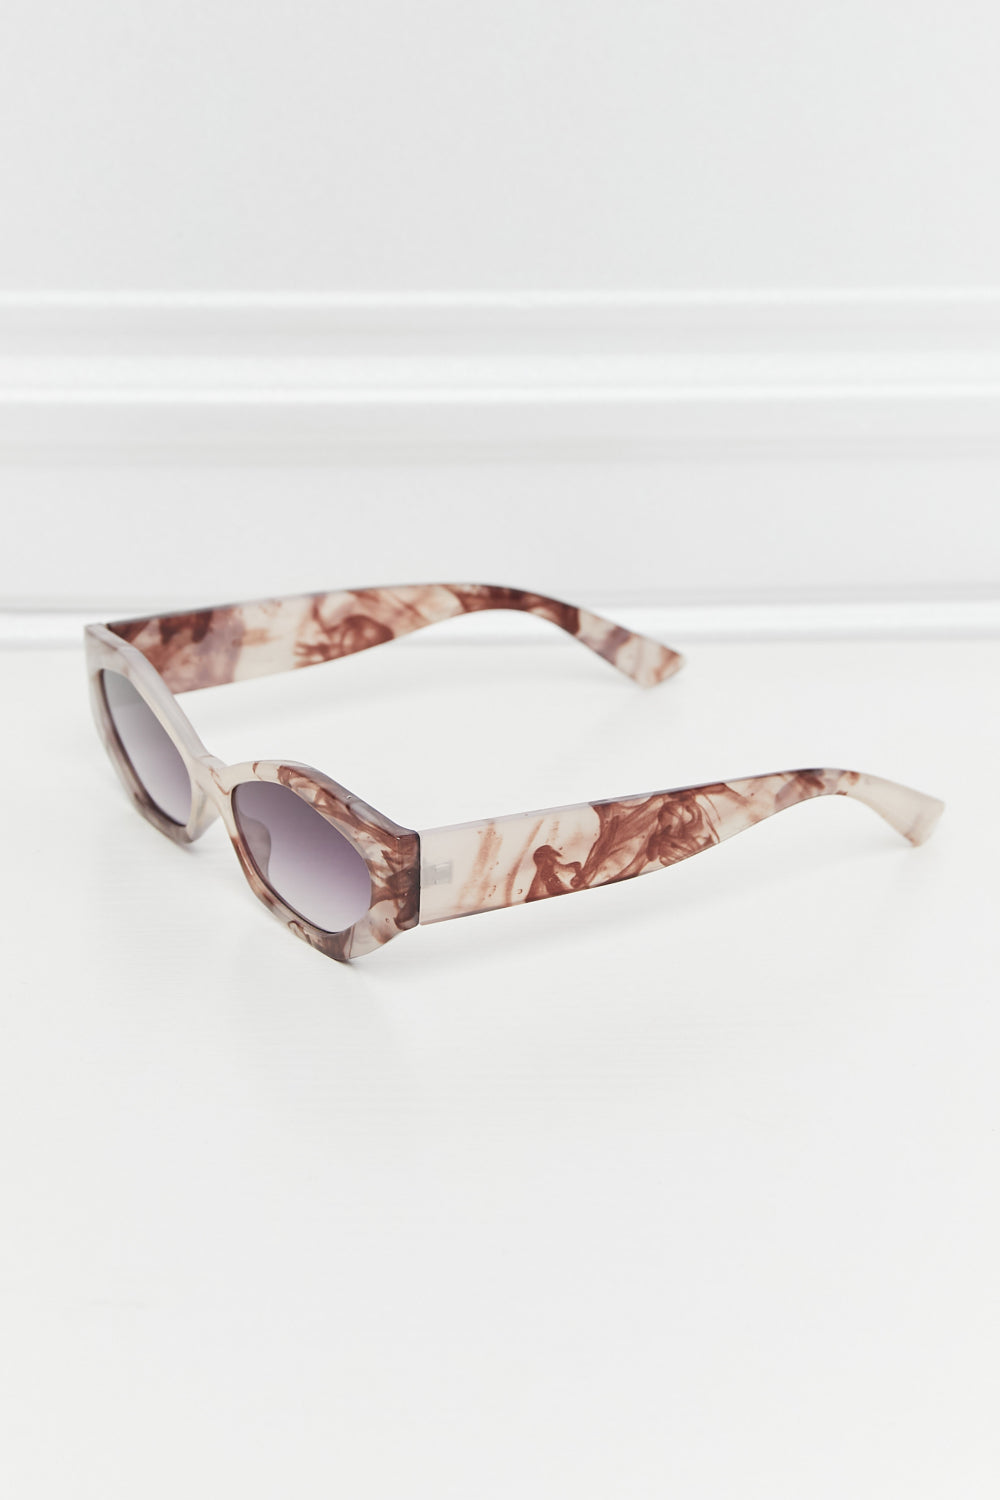 MID GRAY ONE SIZE - Wayfare Polycarbonate Frame Sunglasses - 3 colors - Sunglasses at TFC&H Co.